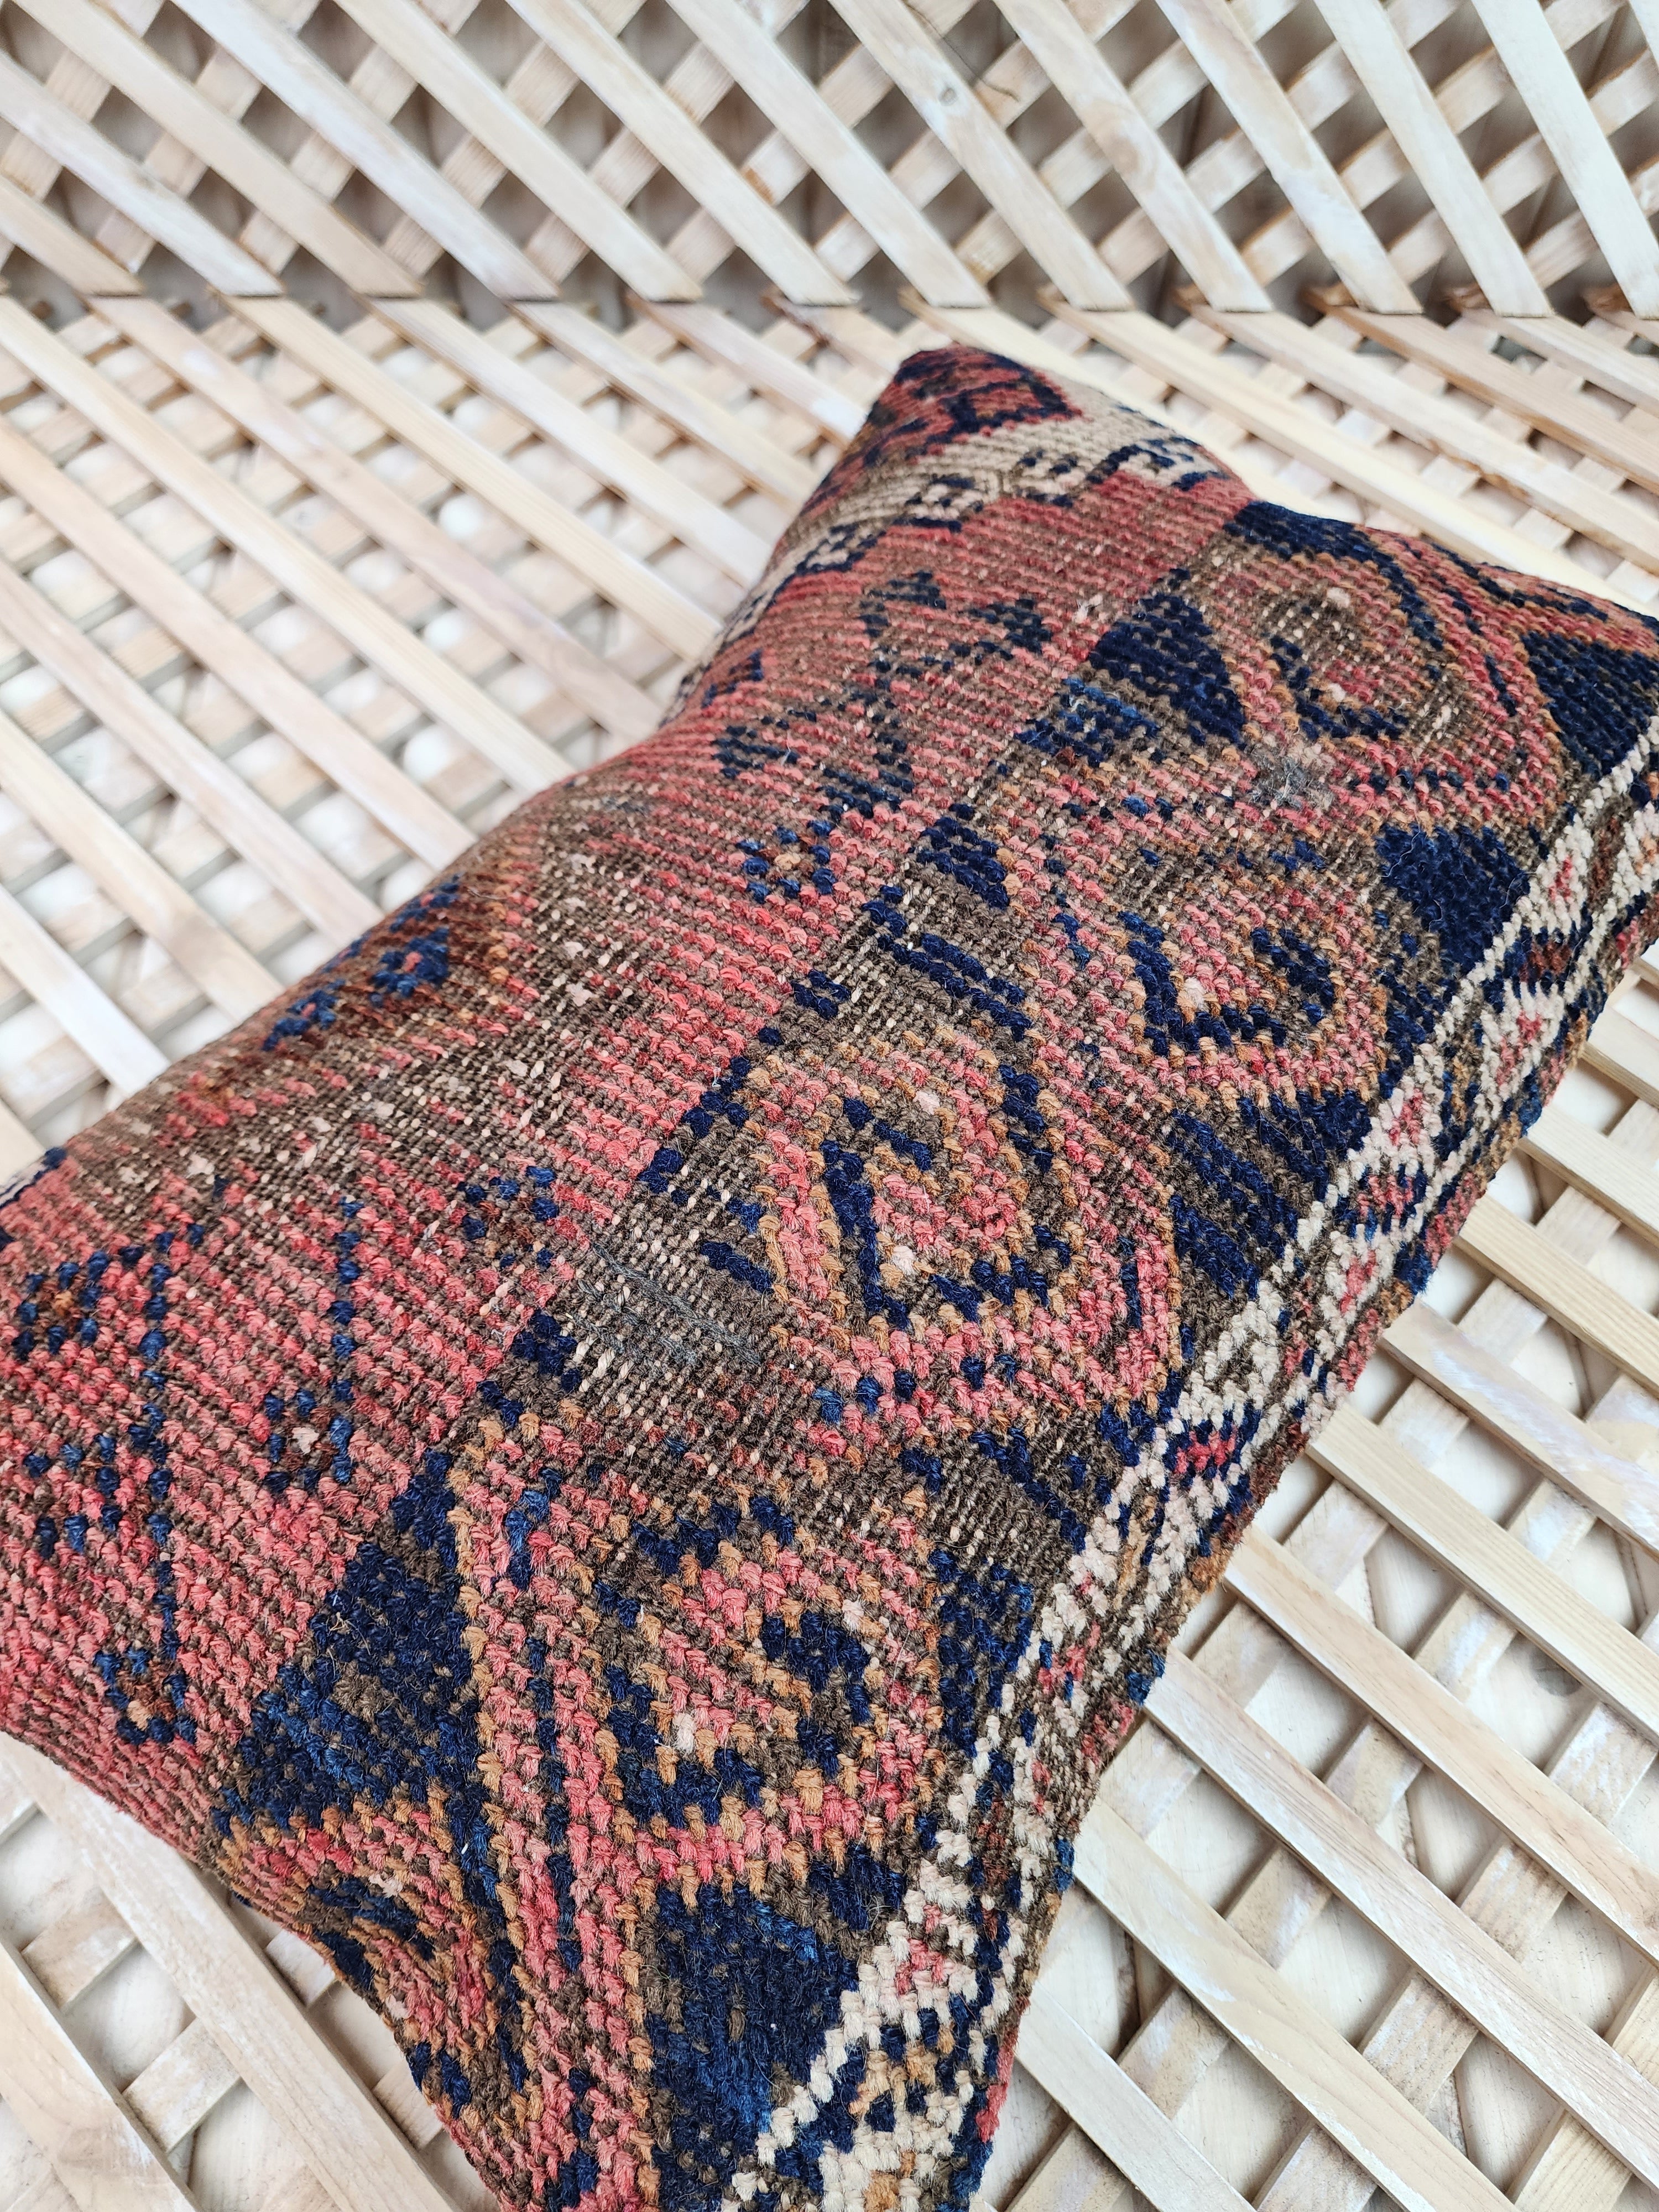 Antique Turkish Carpet Pillow Cover 12x20 inch